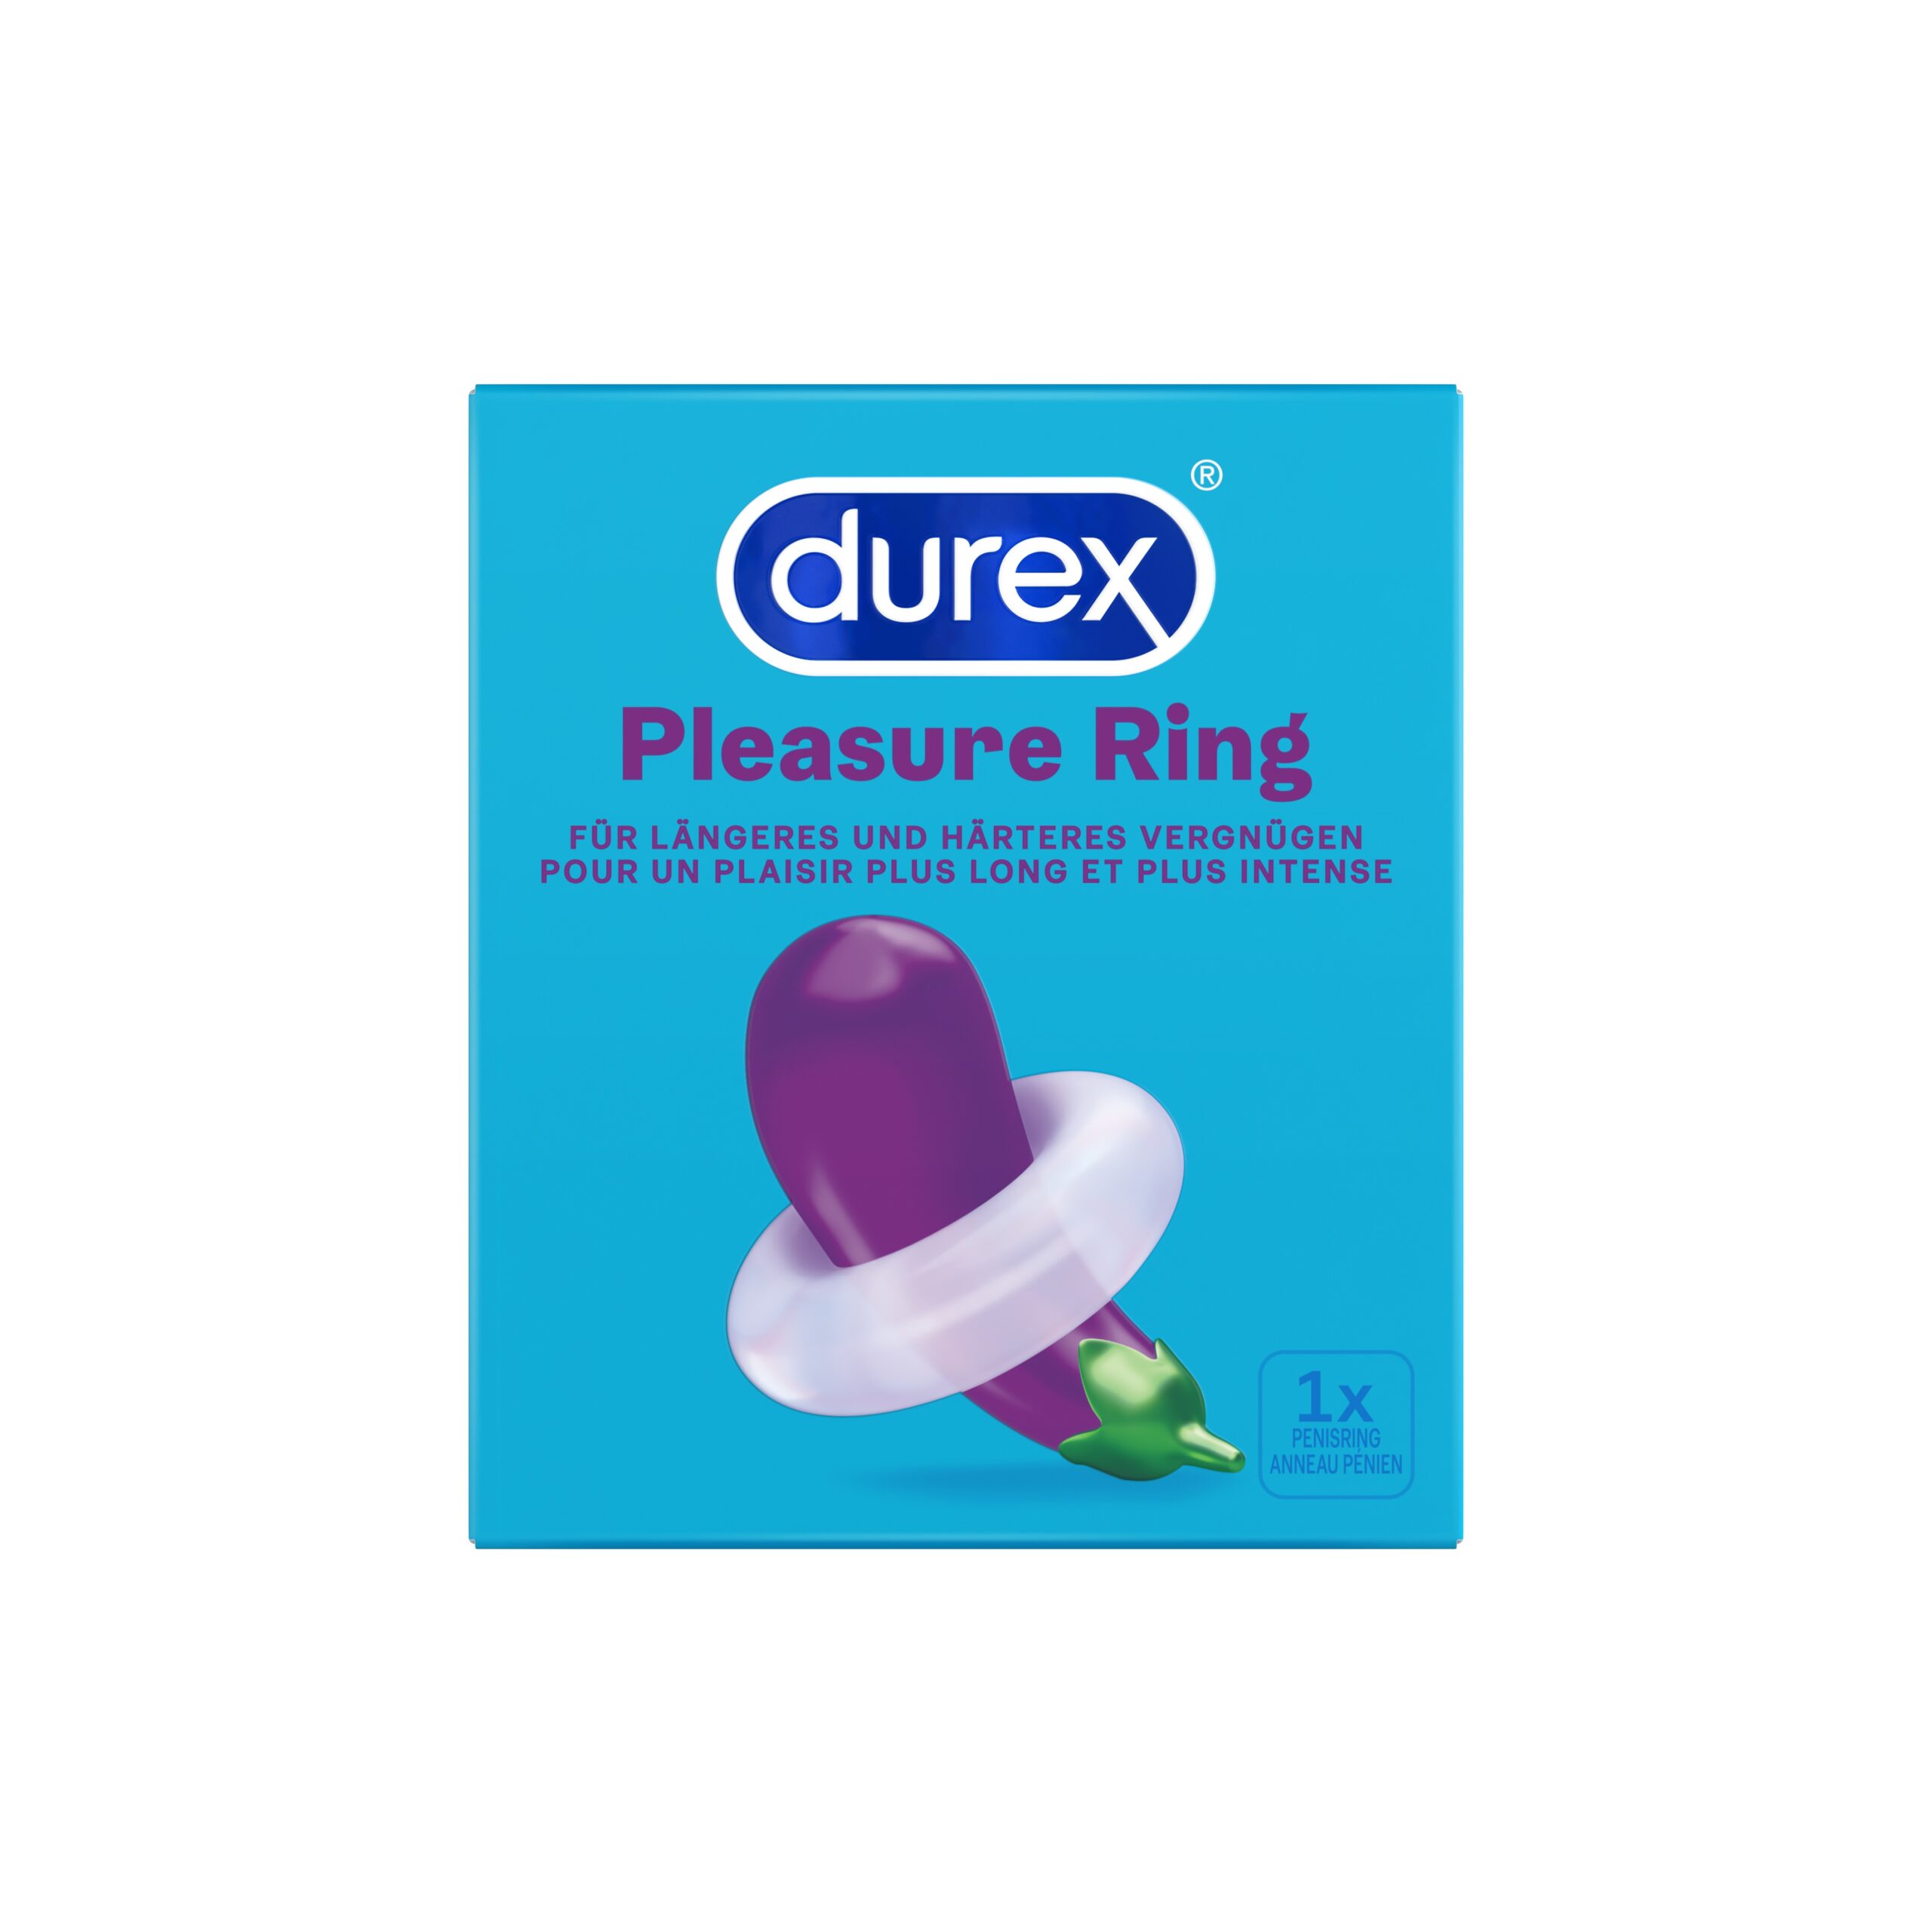 Durex Pleasure Ring Penisring Produktansicht